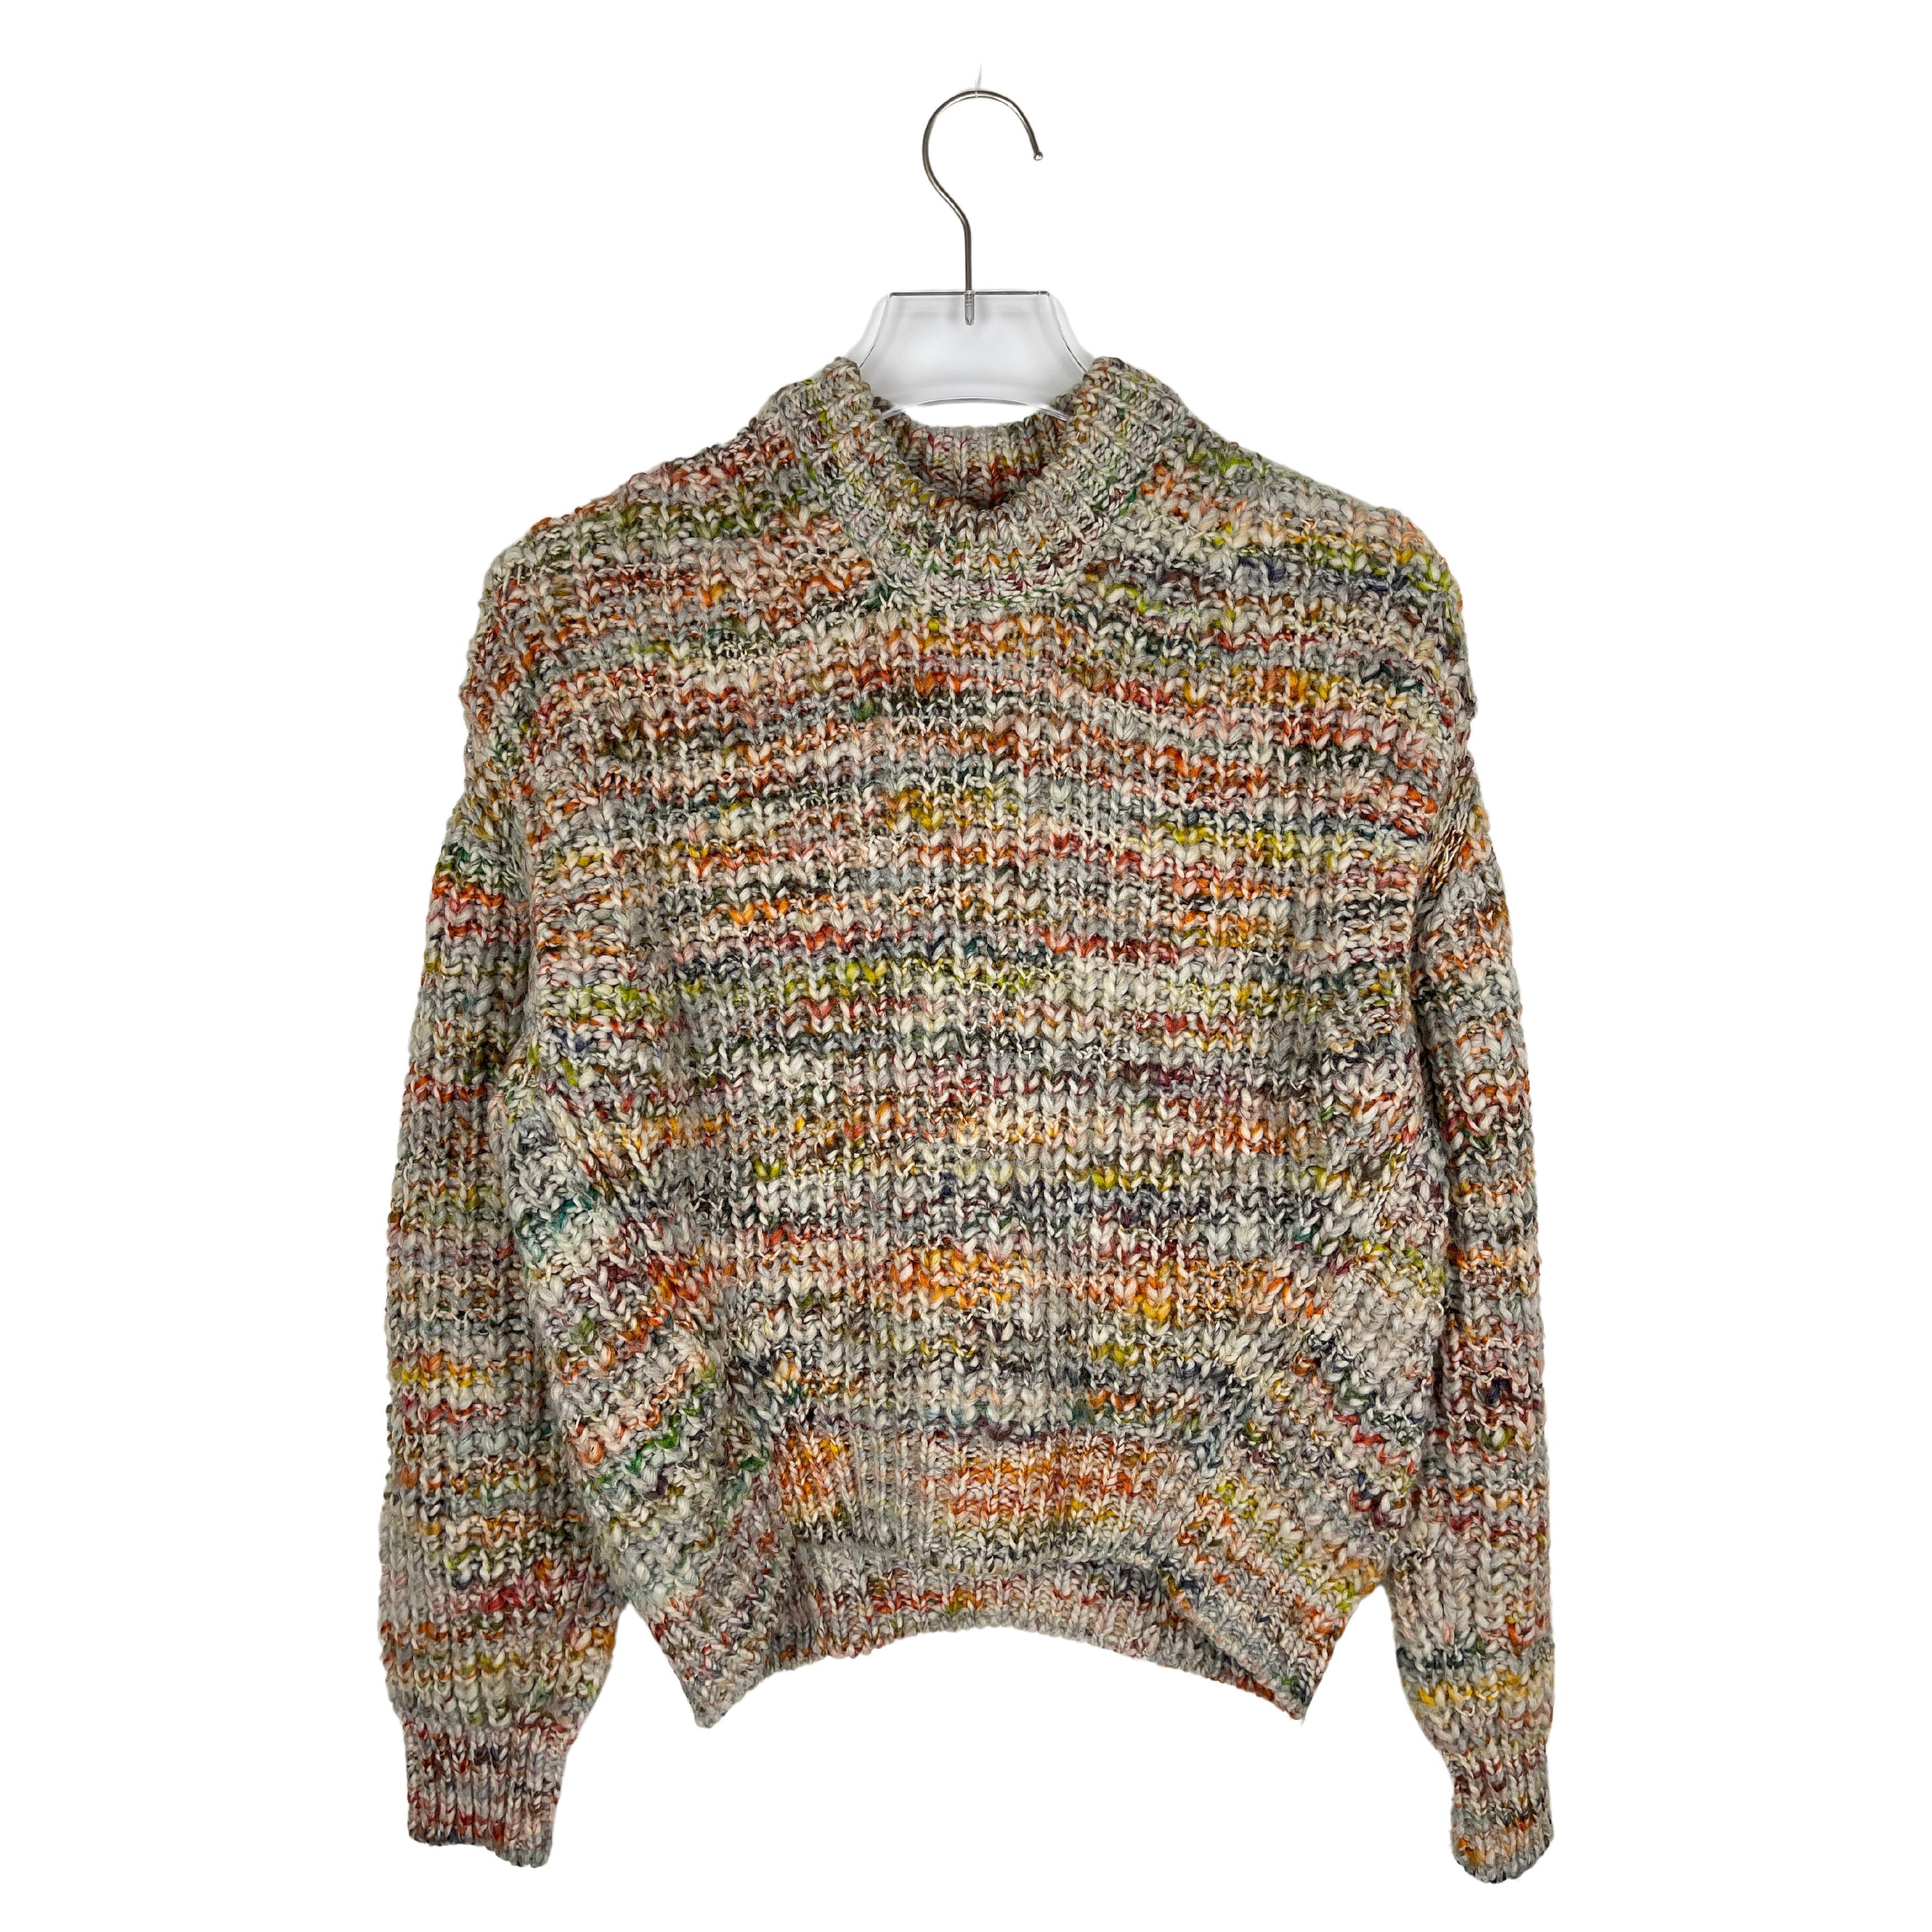 Acne Studios "Zora" Chunky Sweater For Sale